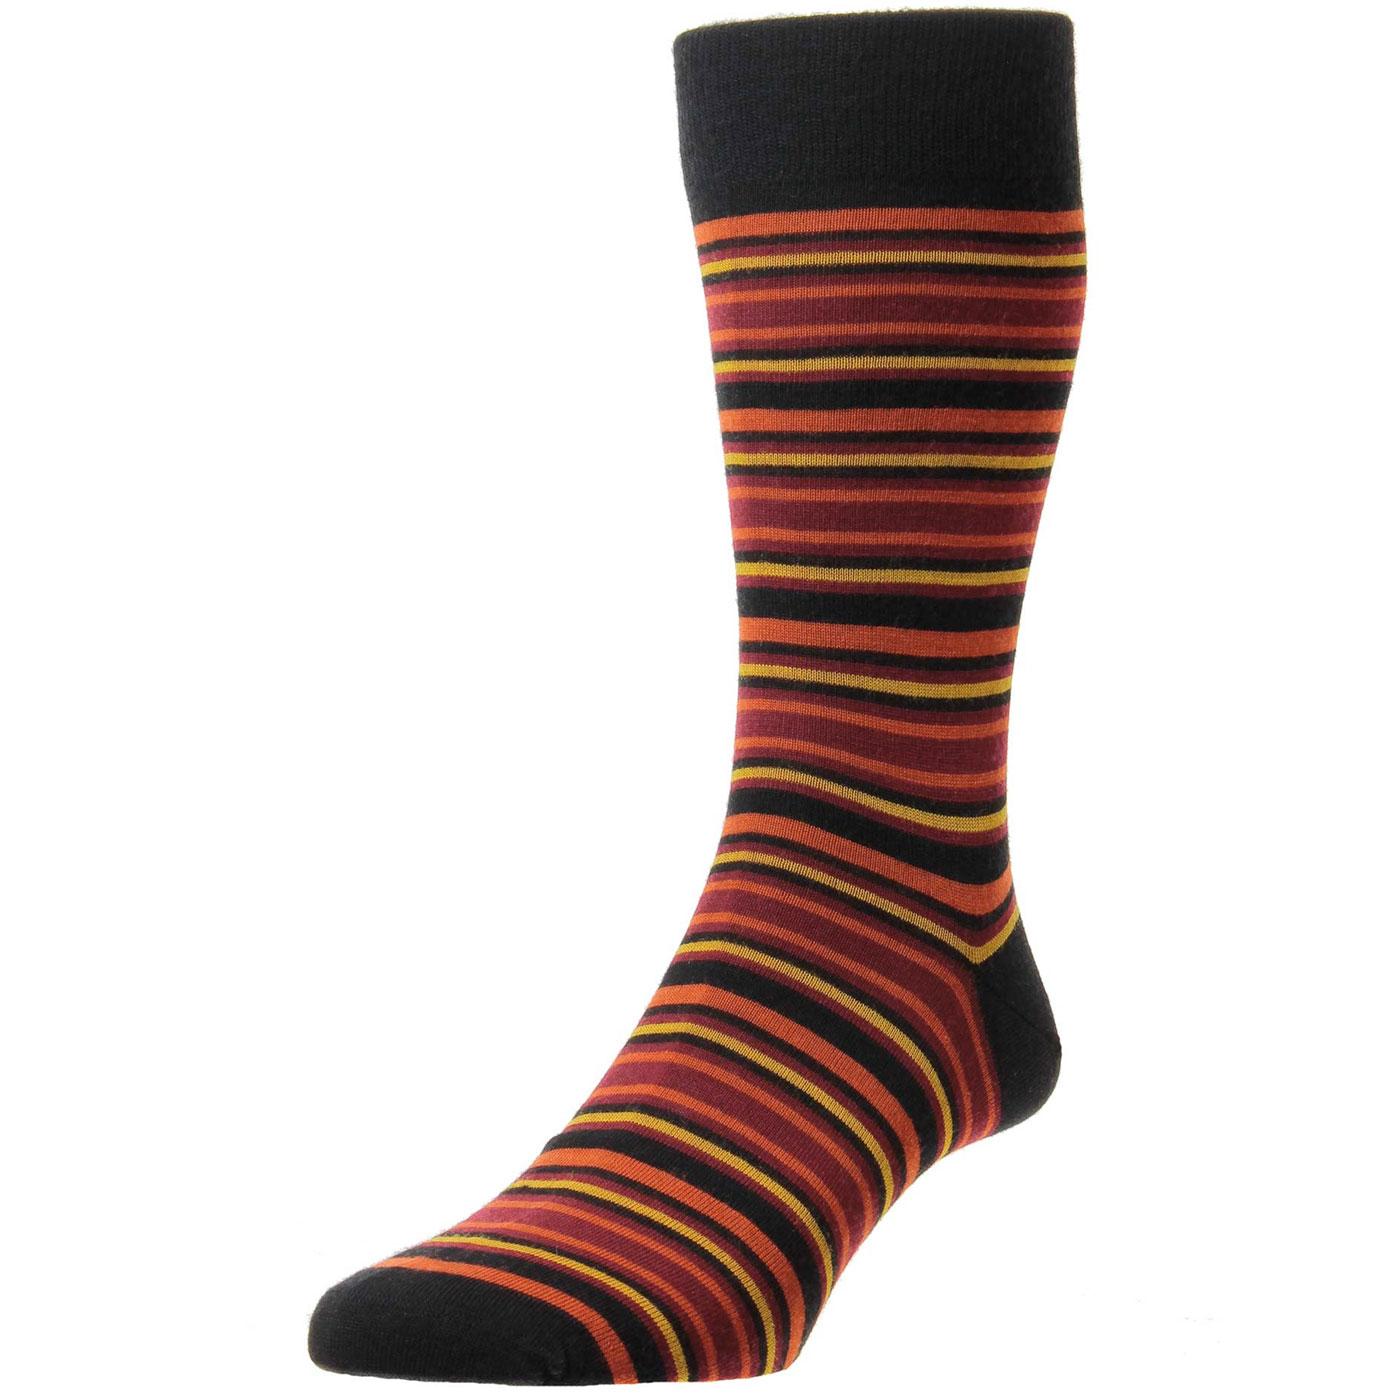 Piper Mod Stripe Socks by Pantherella